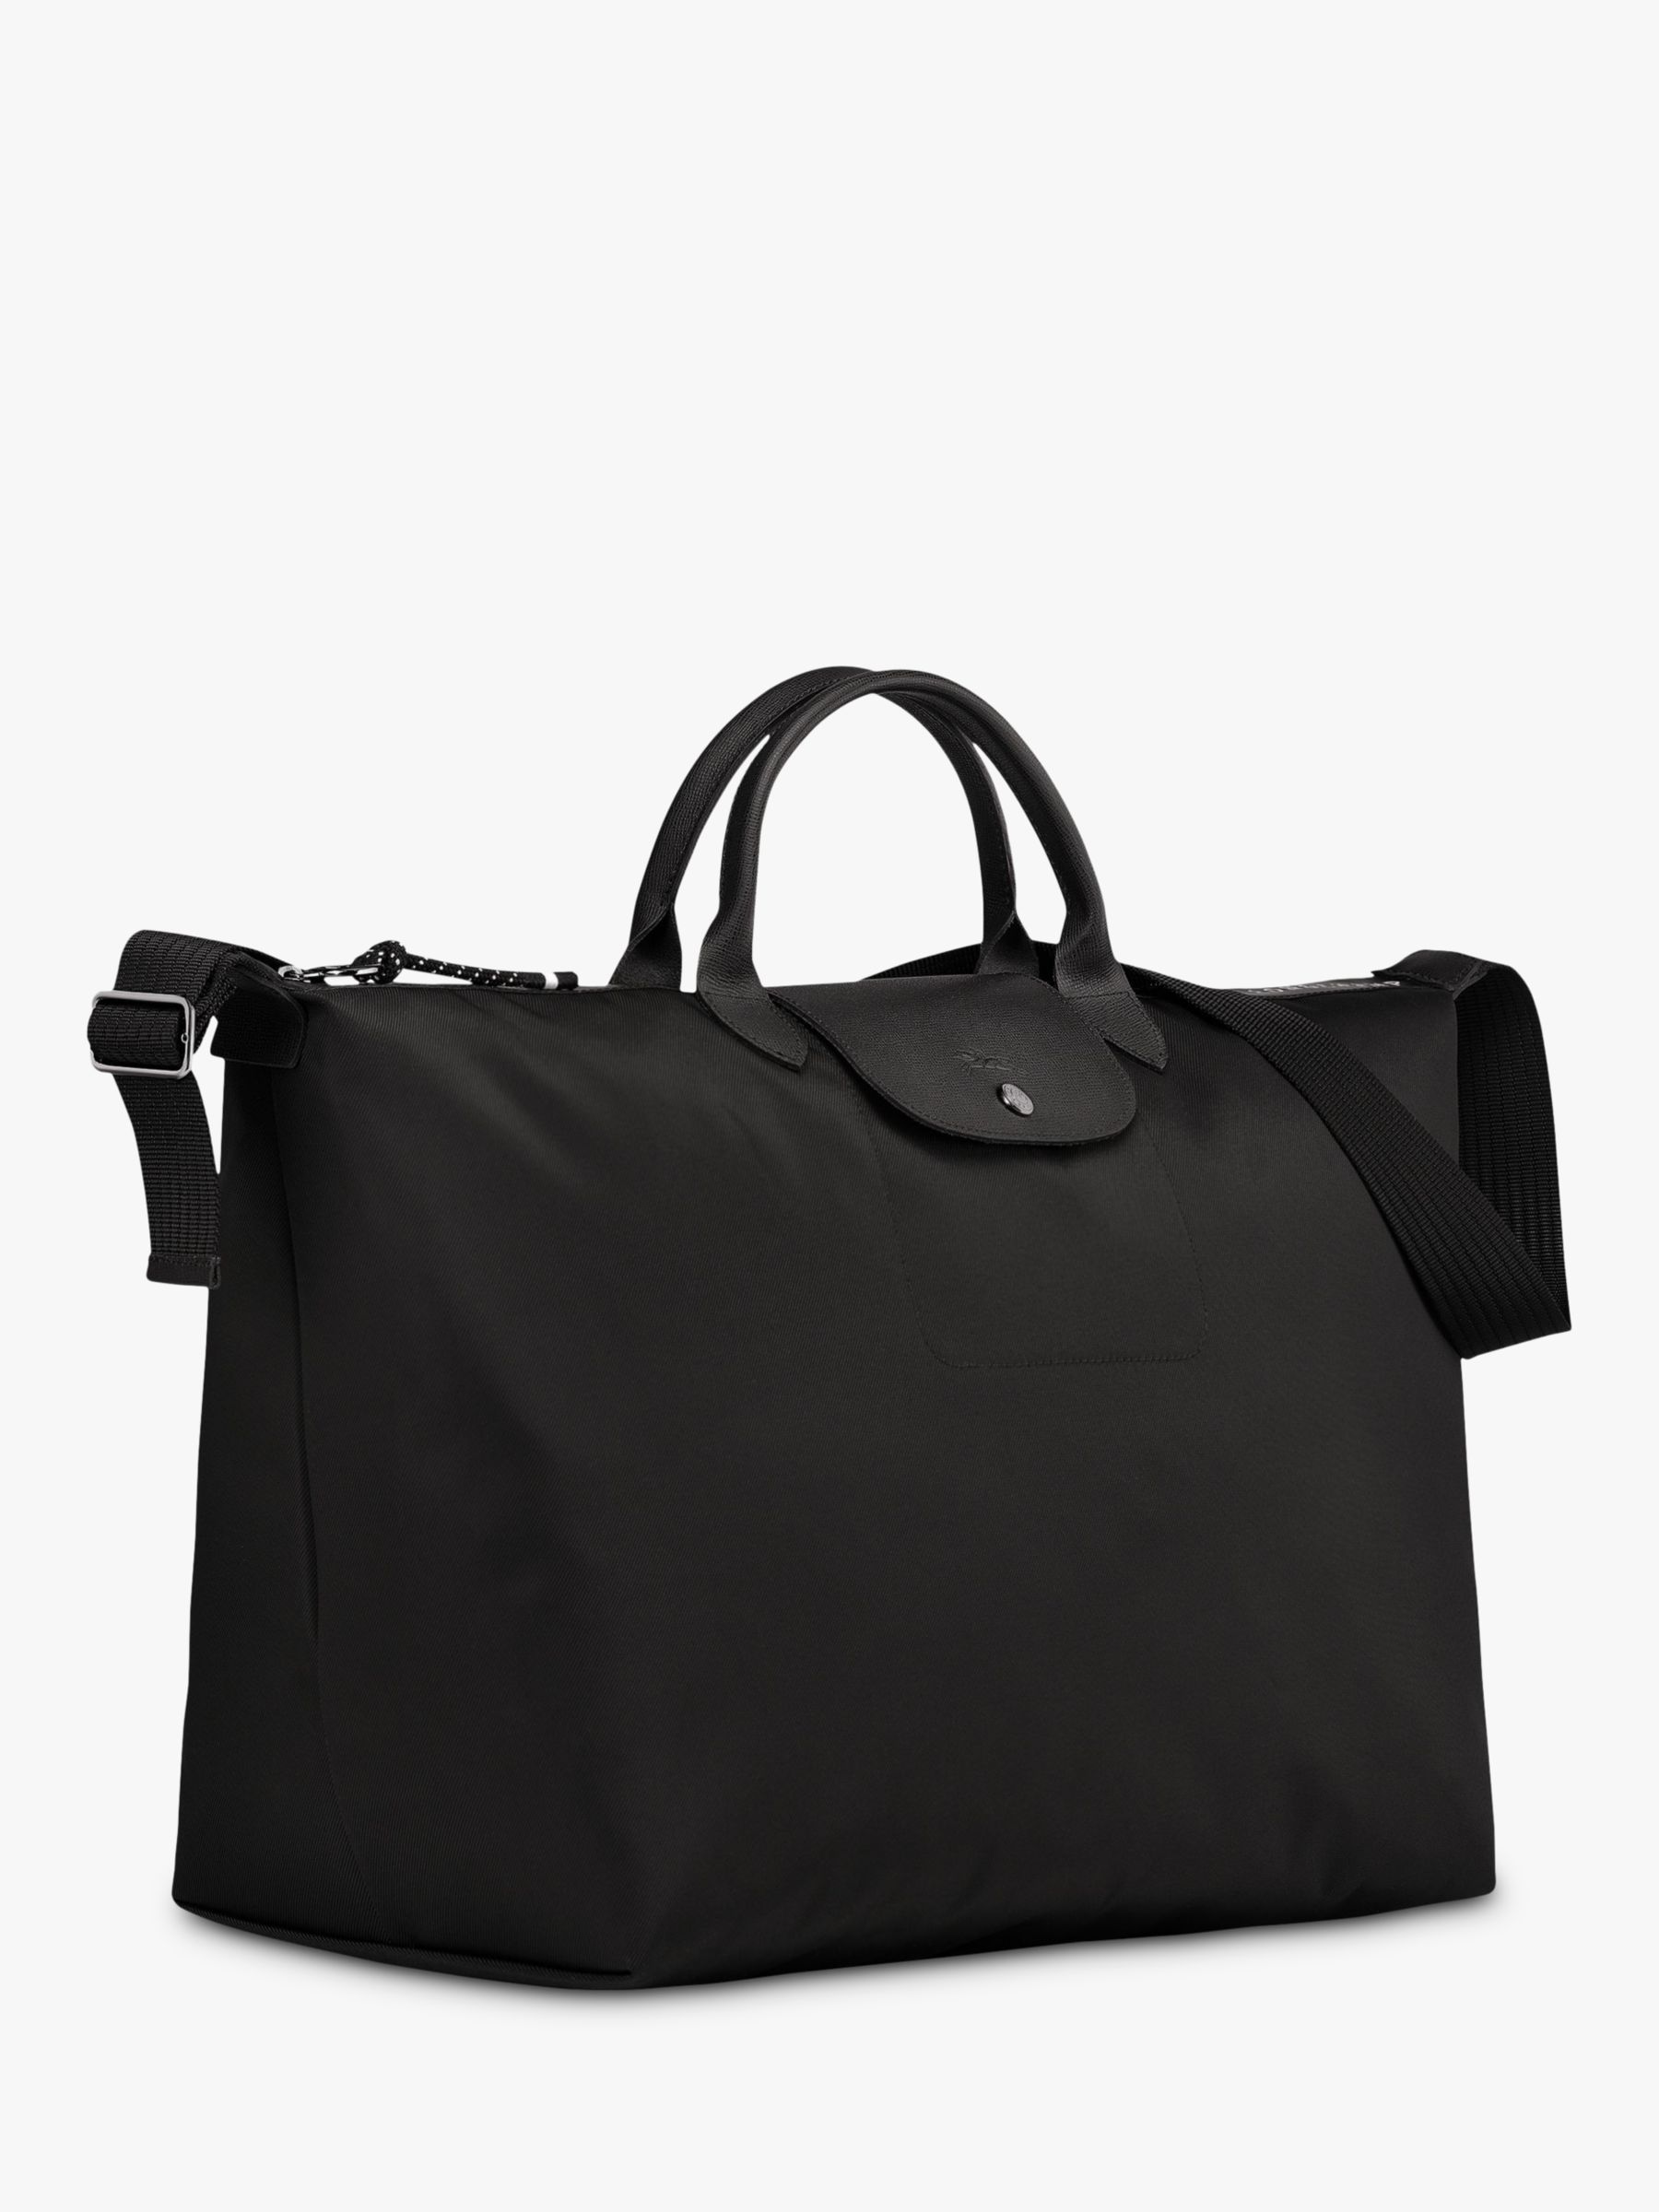 Longchamp Le Pliage Extra Large Nylon Travel Bag in Gray